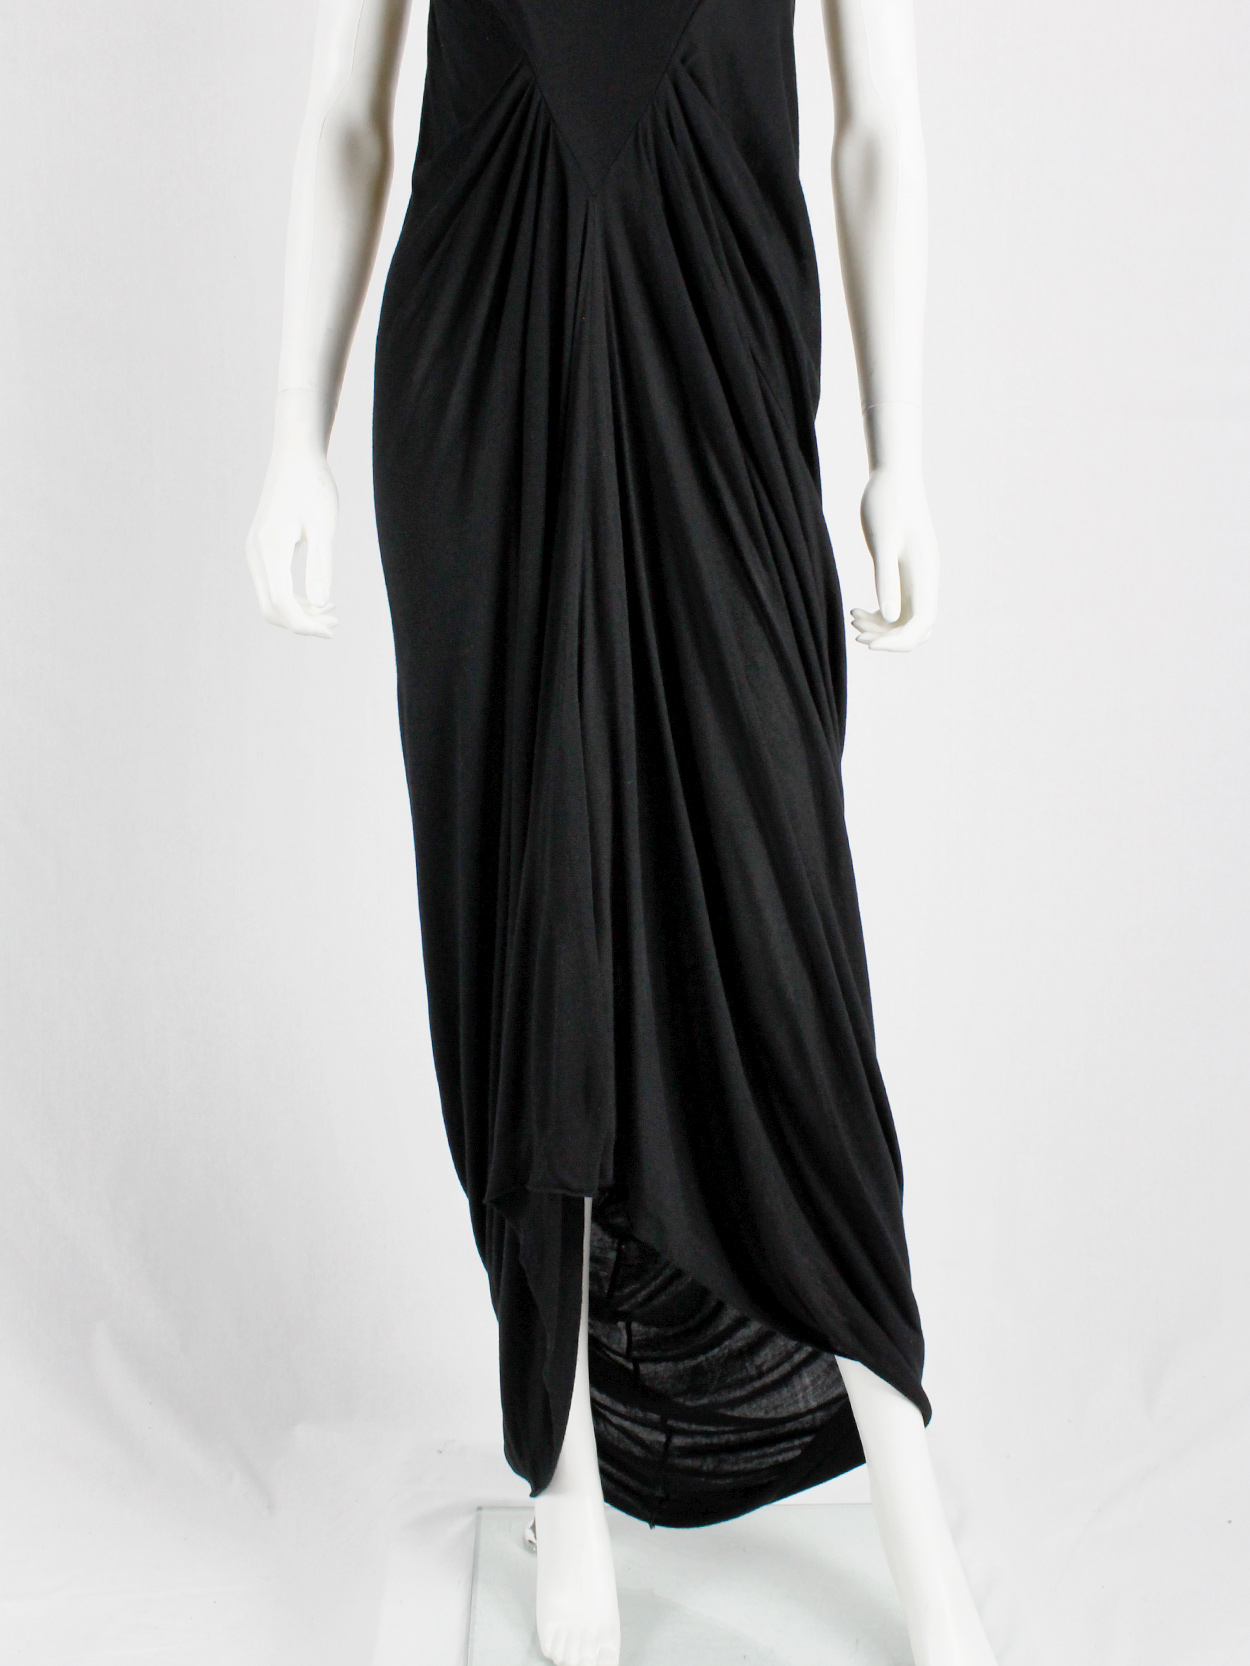 Rick Owens ISLAND black draped maxi dress with triangular top spring 2013 (6)